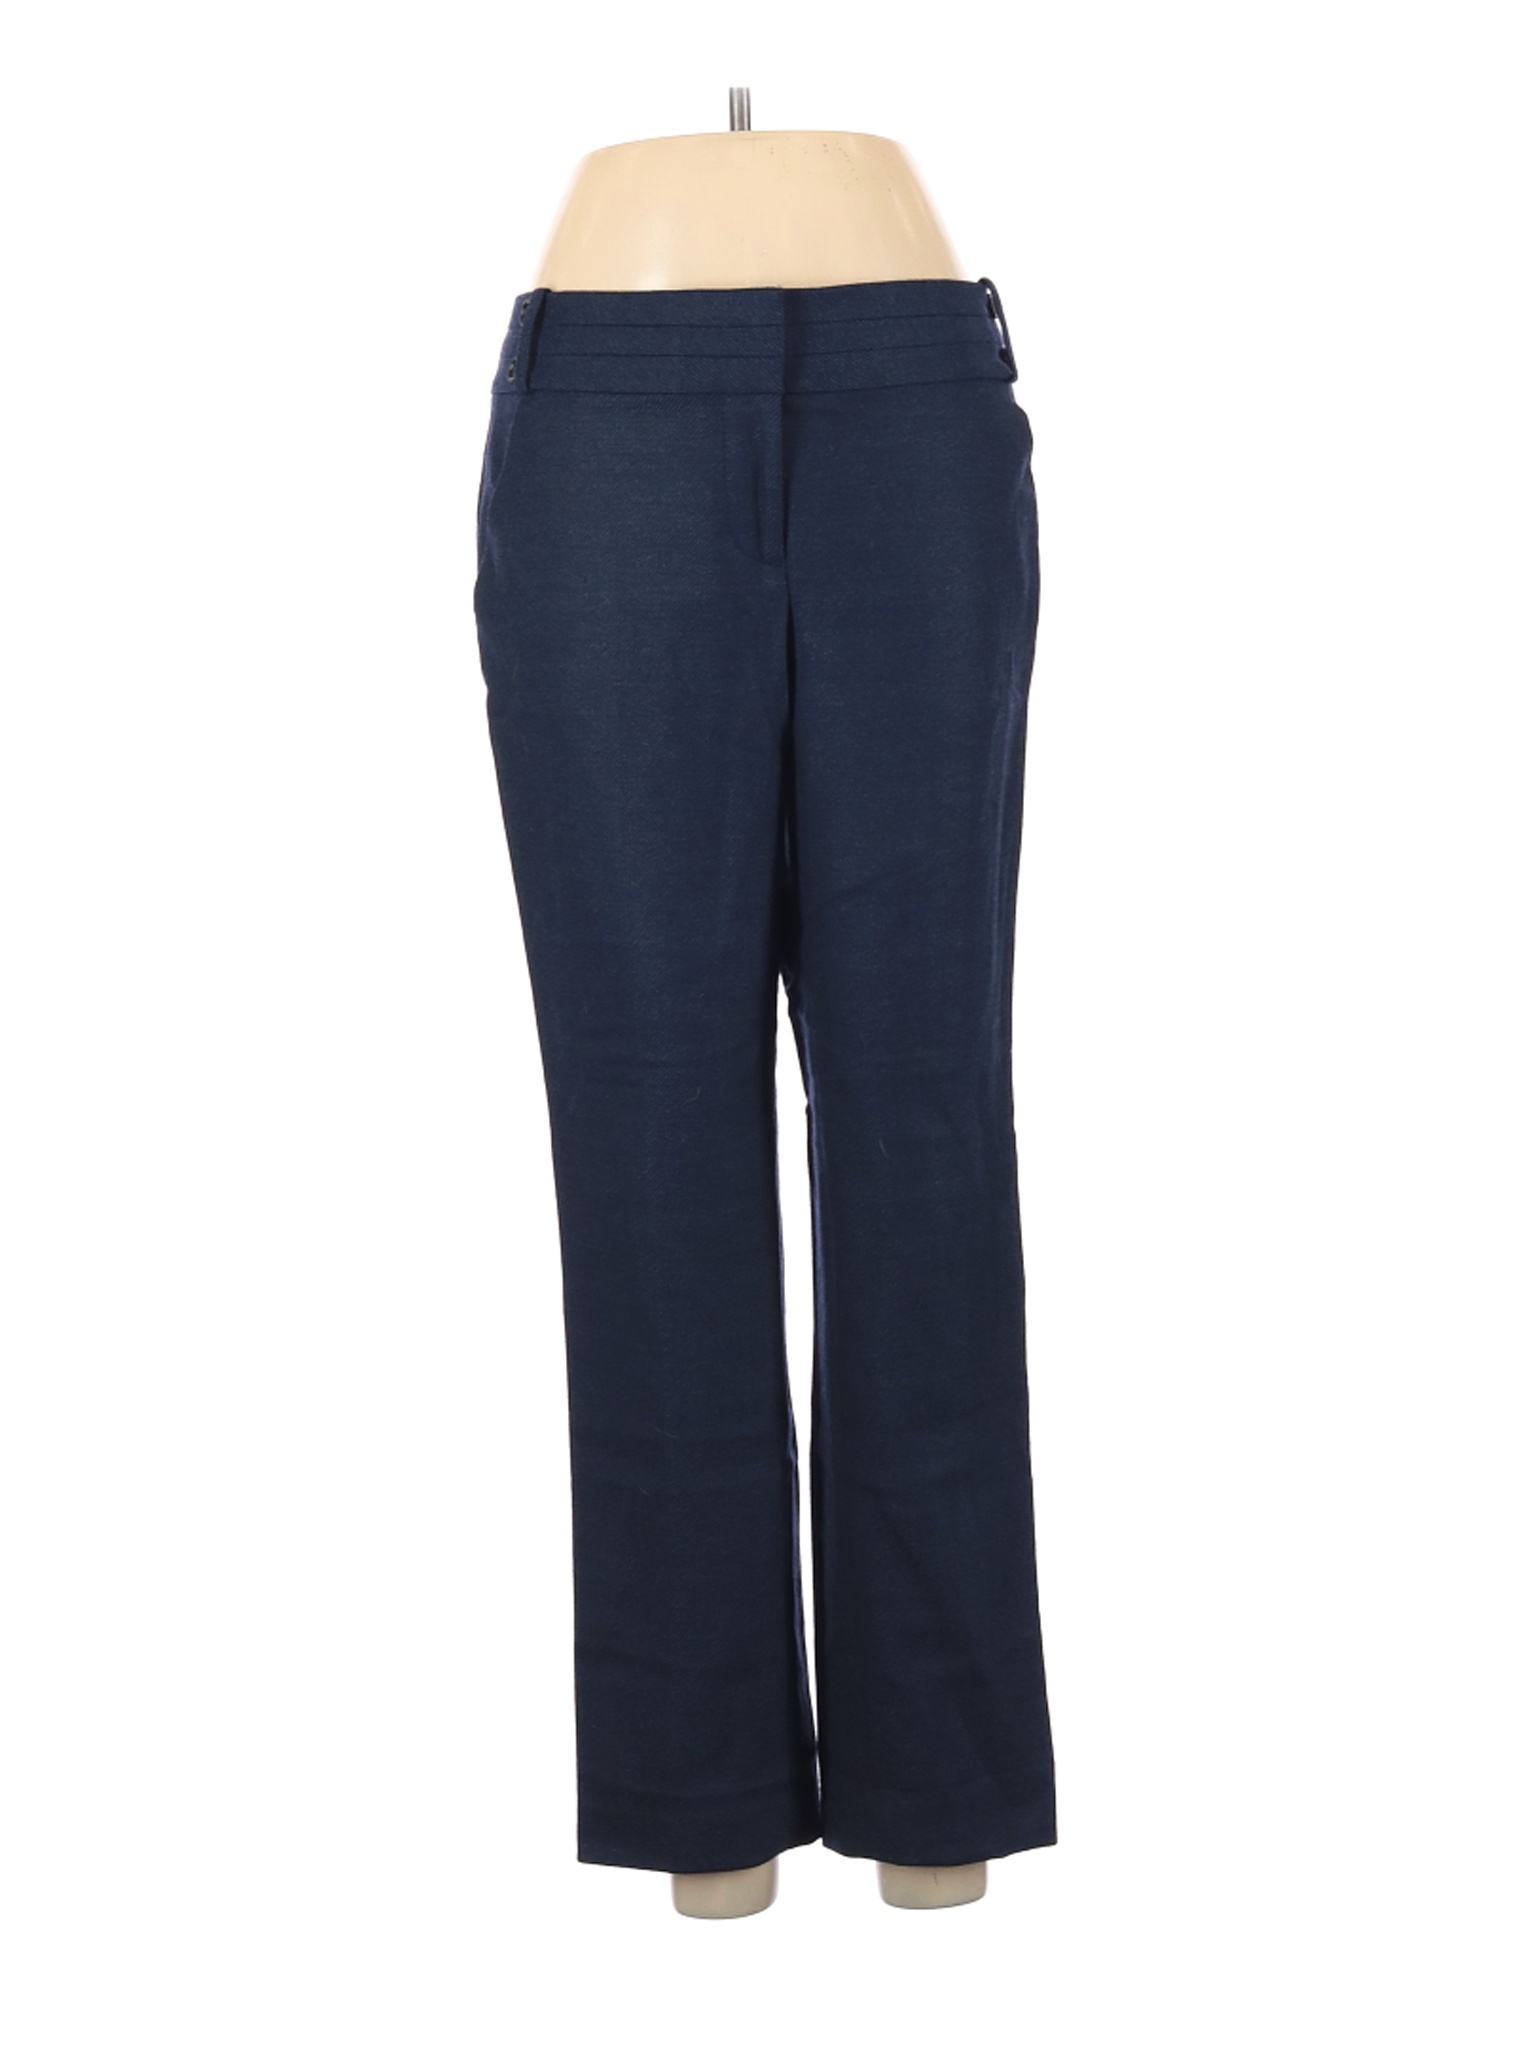 Ann Taylor LOFT Women Blue Dress Pants 6 Petites | eBay